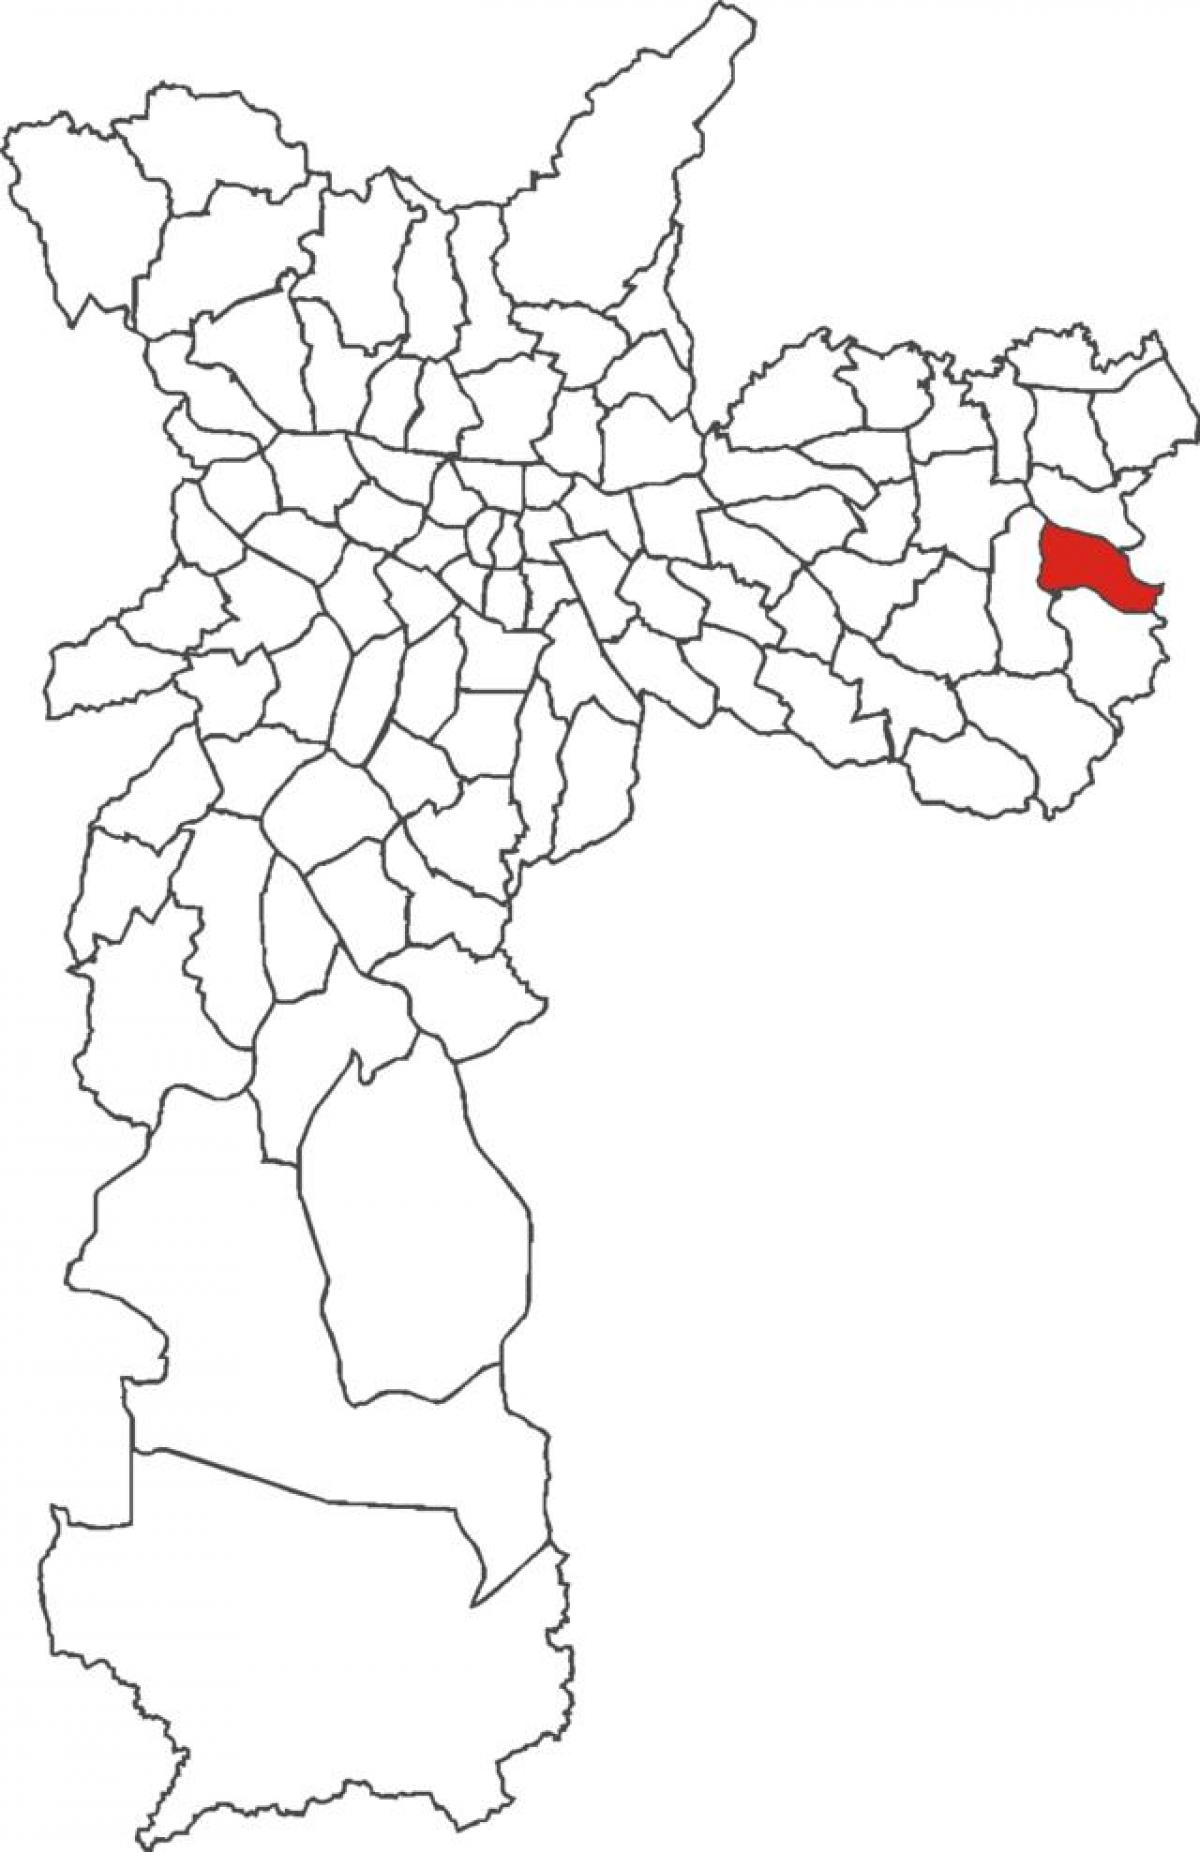 Mapa do distrito de Guaianases